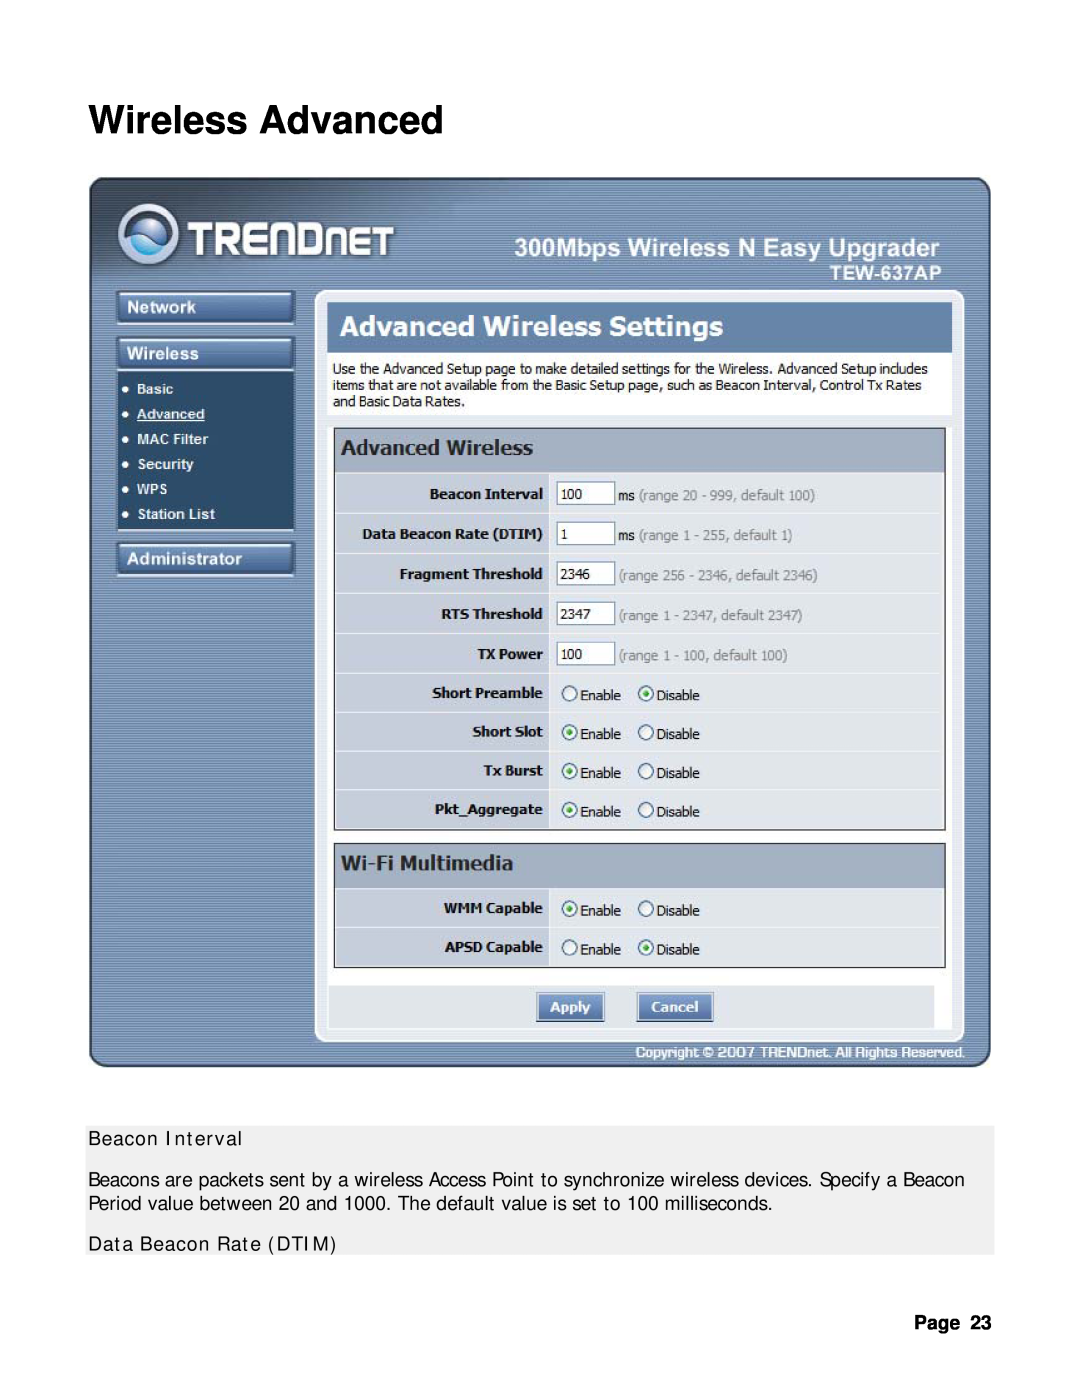 TRENDnet TEW-637AP manual Wireless Advanced, Beacon Interval, Data Beacon Rate DTIM 